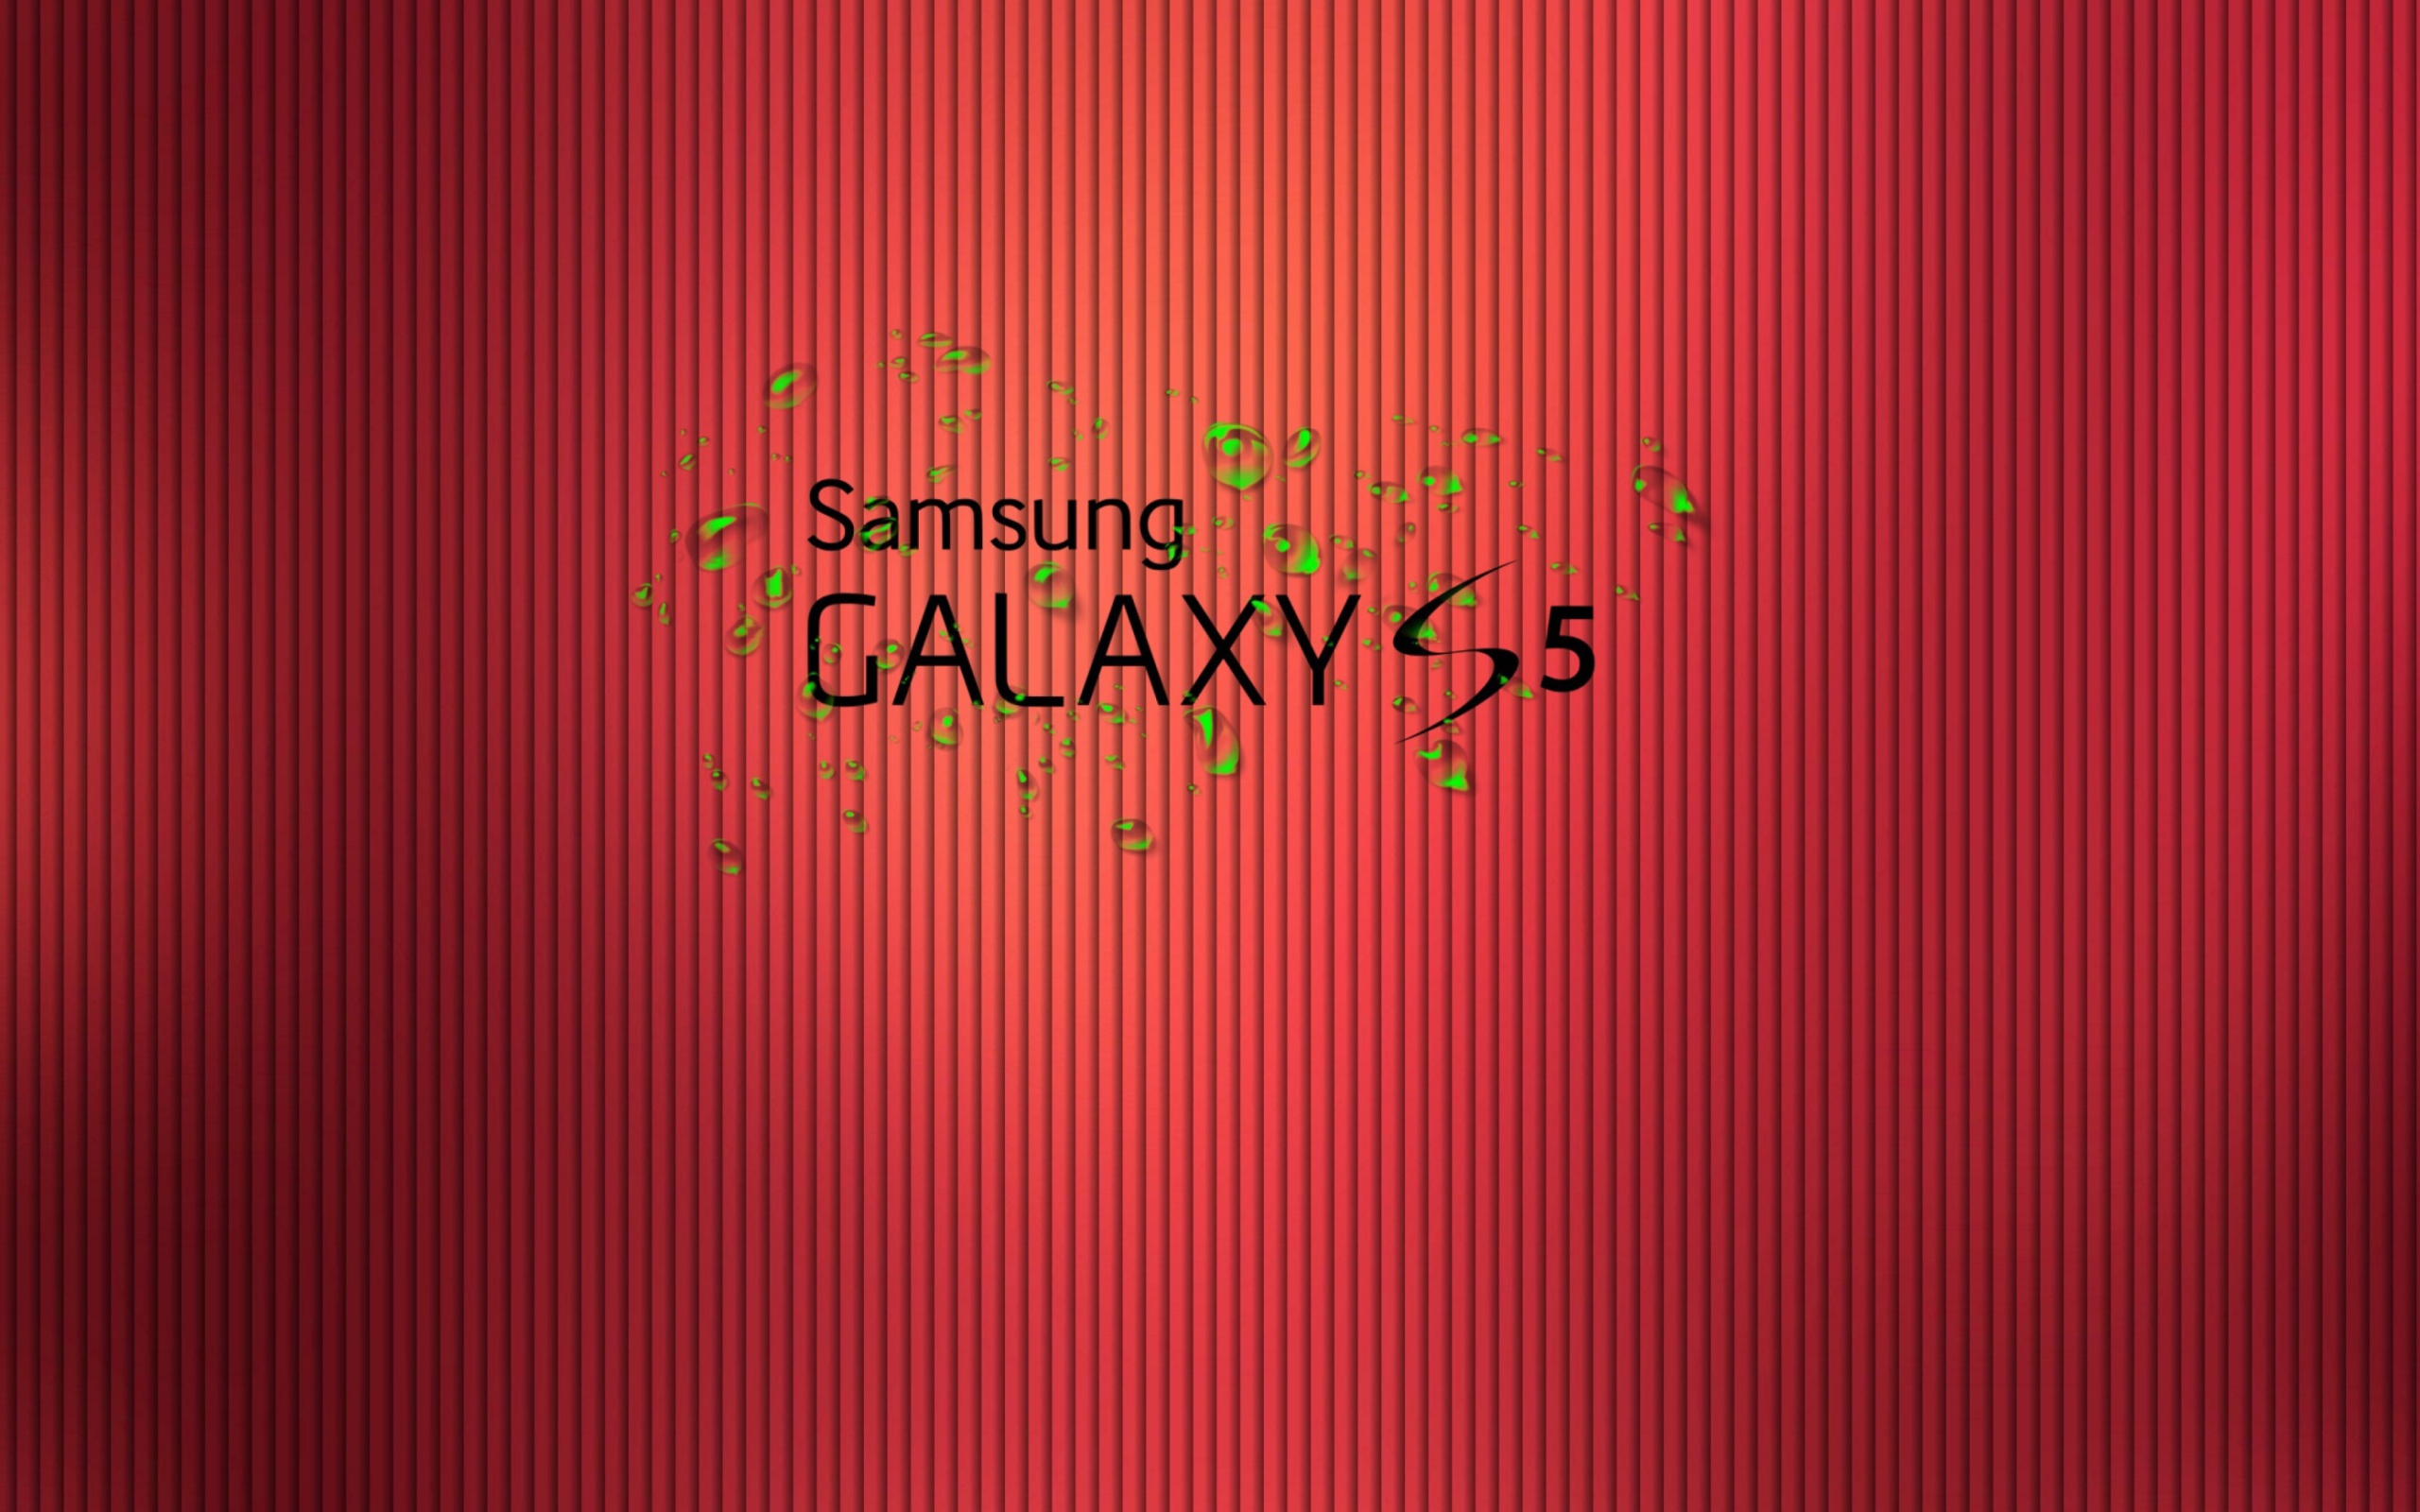 Das Galaxy S5 Wallpaper 2560x1600